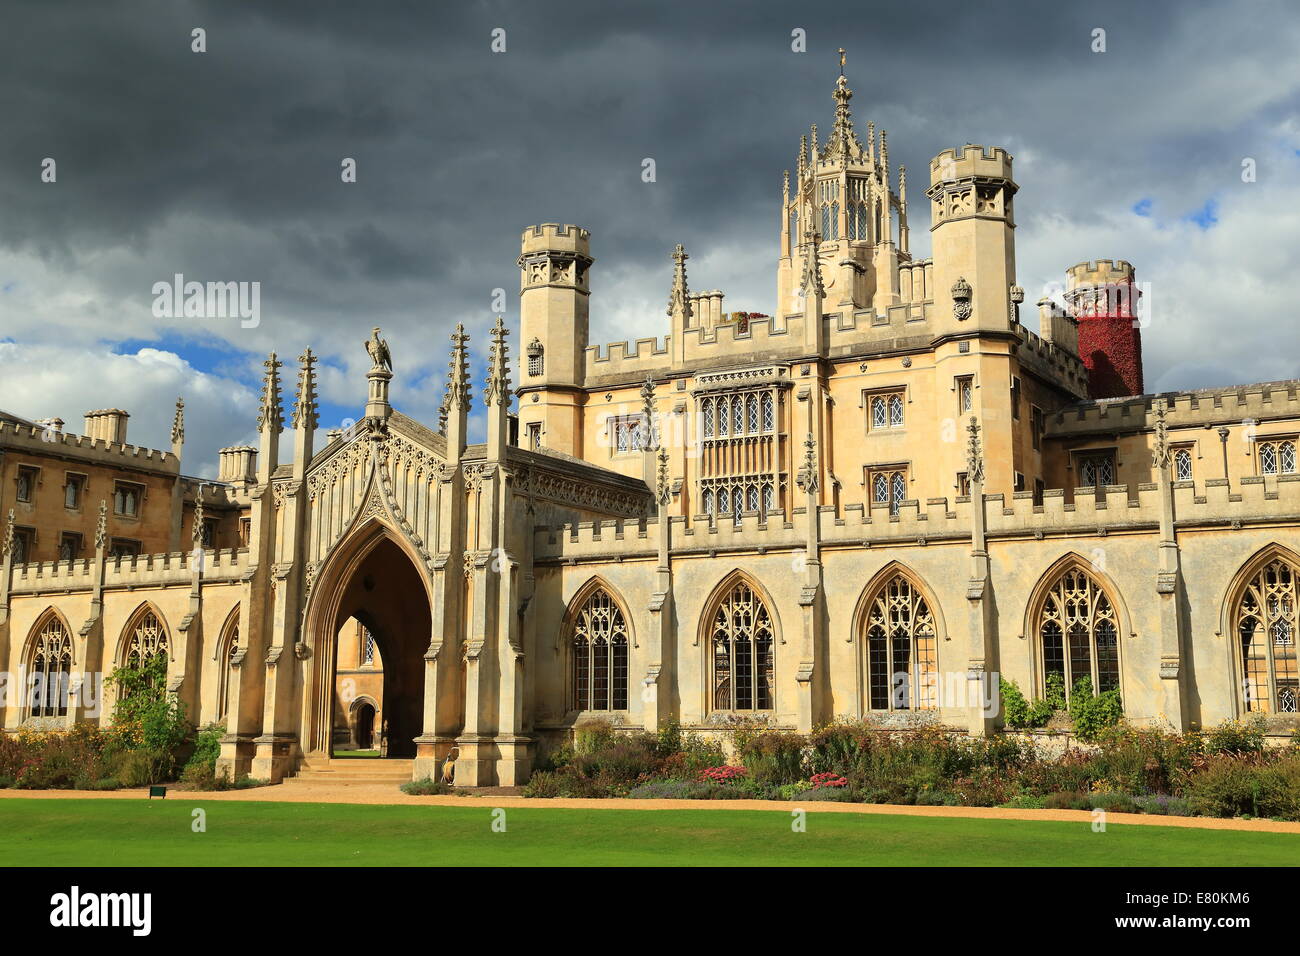 St John's college with dark clouds, University of Cambridge, UK. Stock Photo